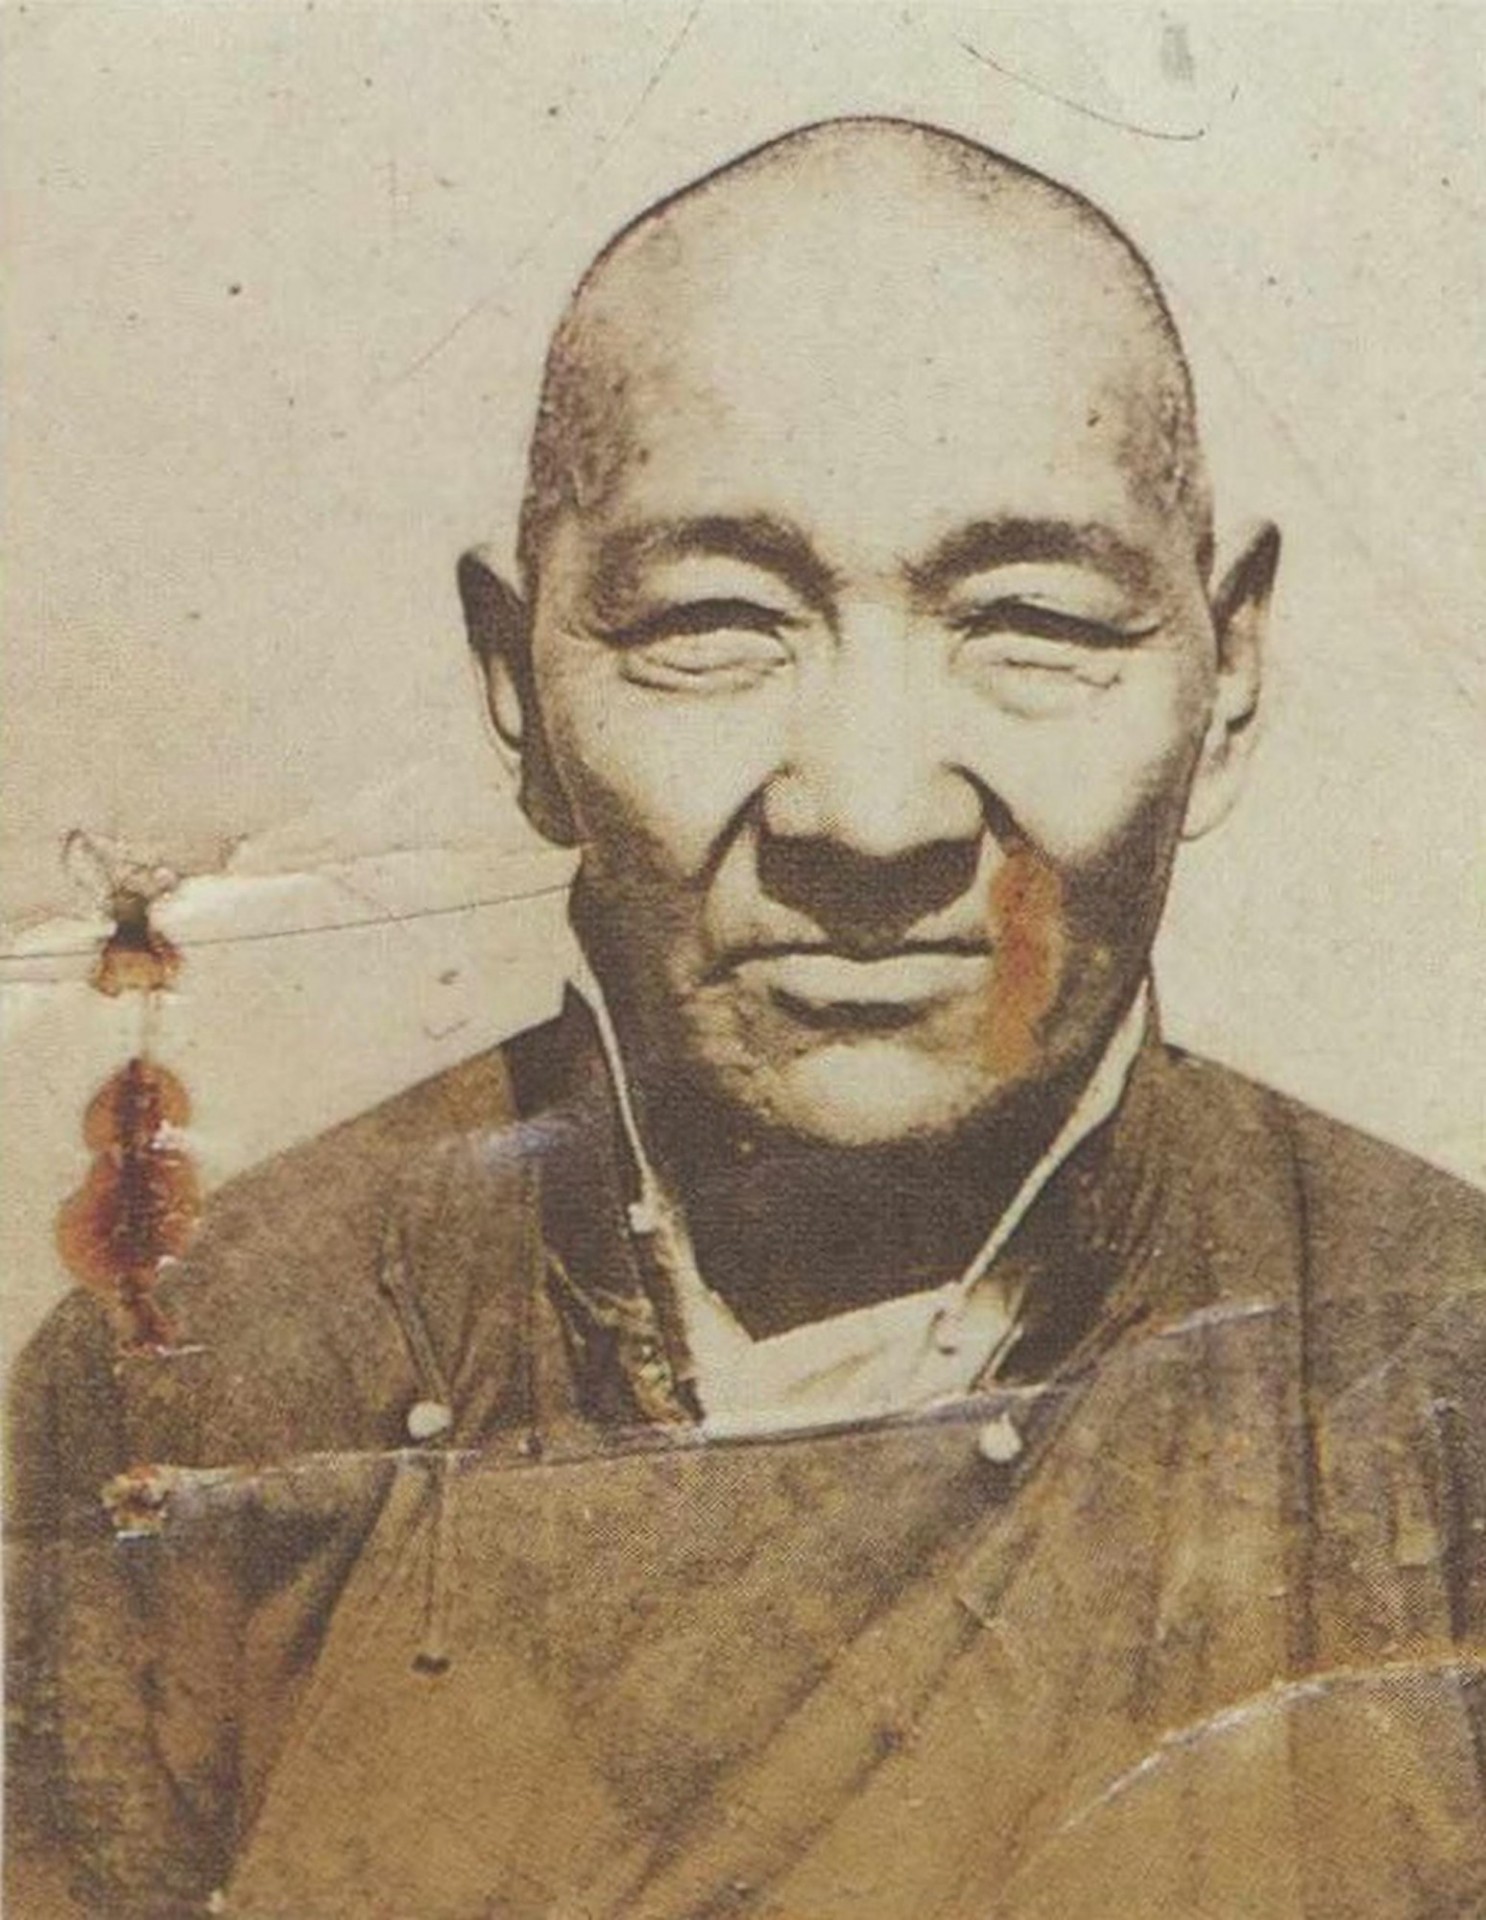 Eastern Tibetan trader, Khatag Dzamyag (1896-1961)